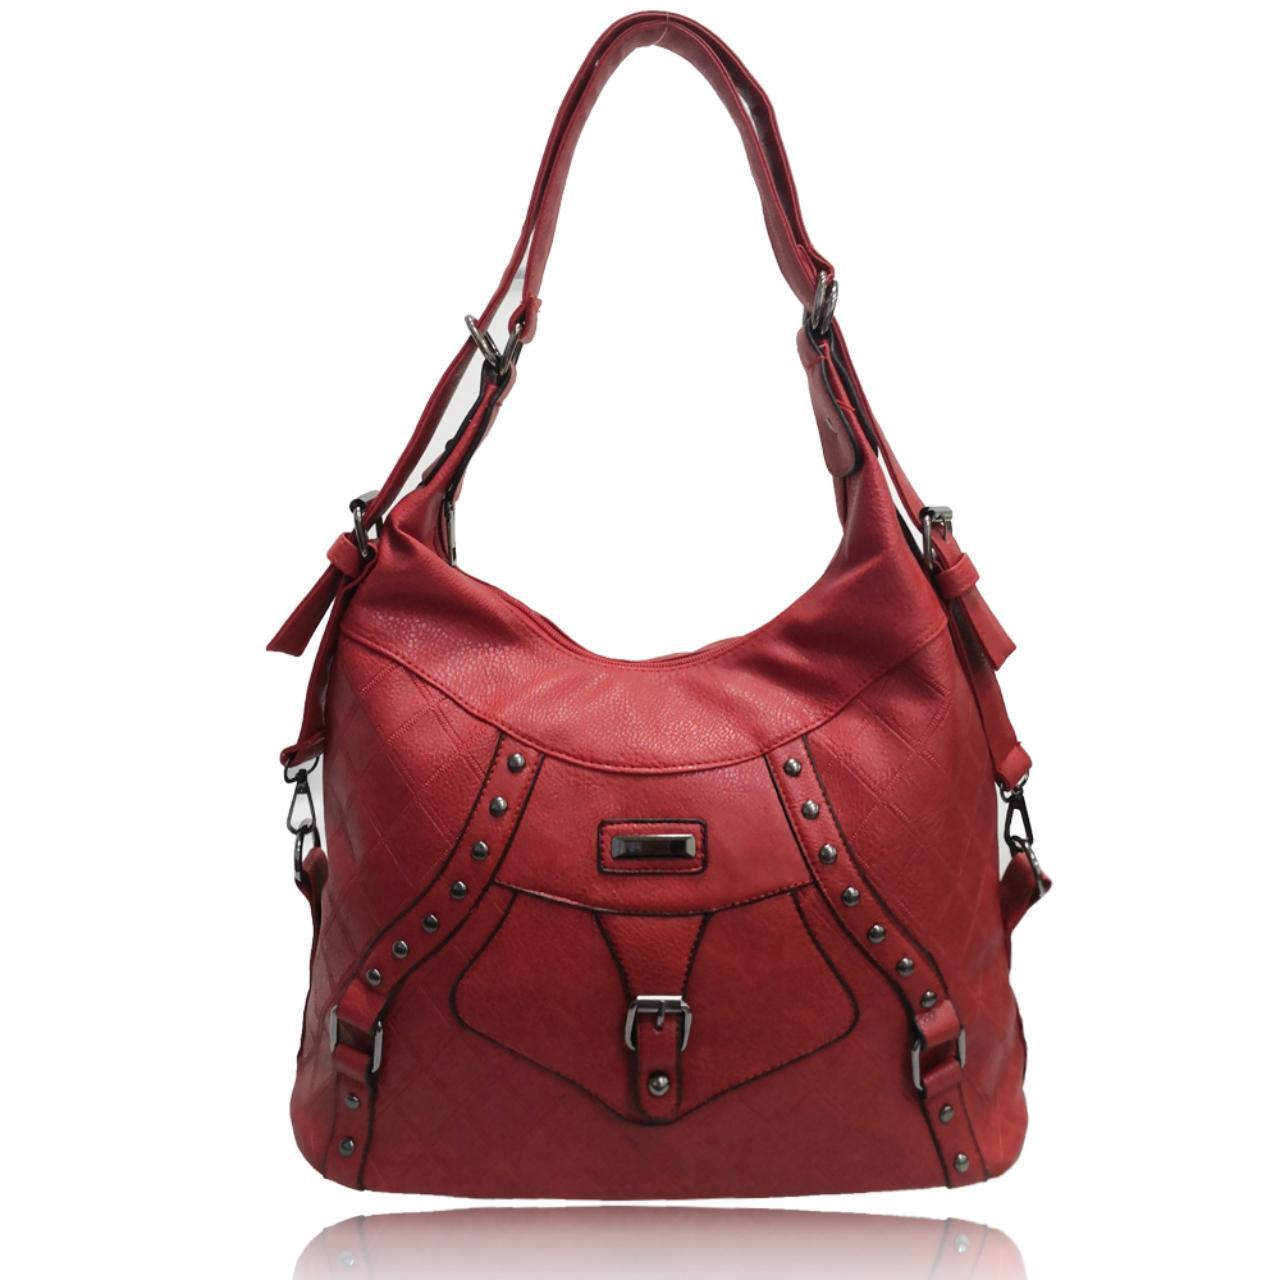 Alice Metal Detail Hobo Shoulder Bag Red! The PU... - Depop